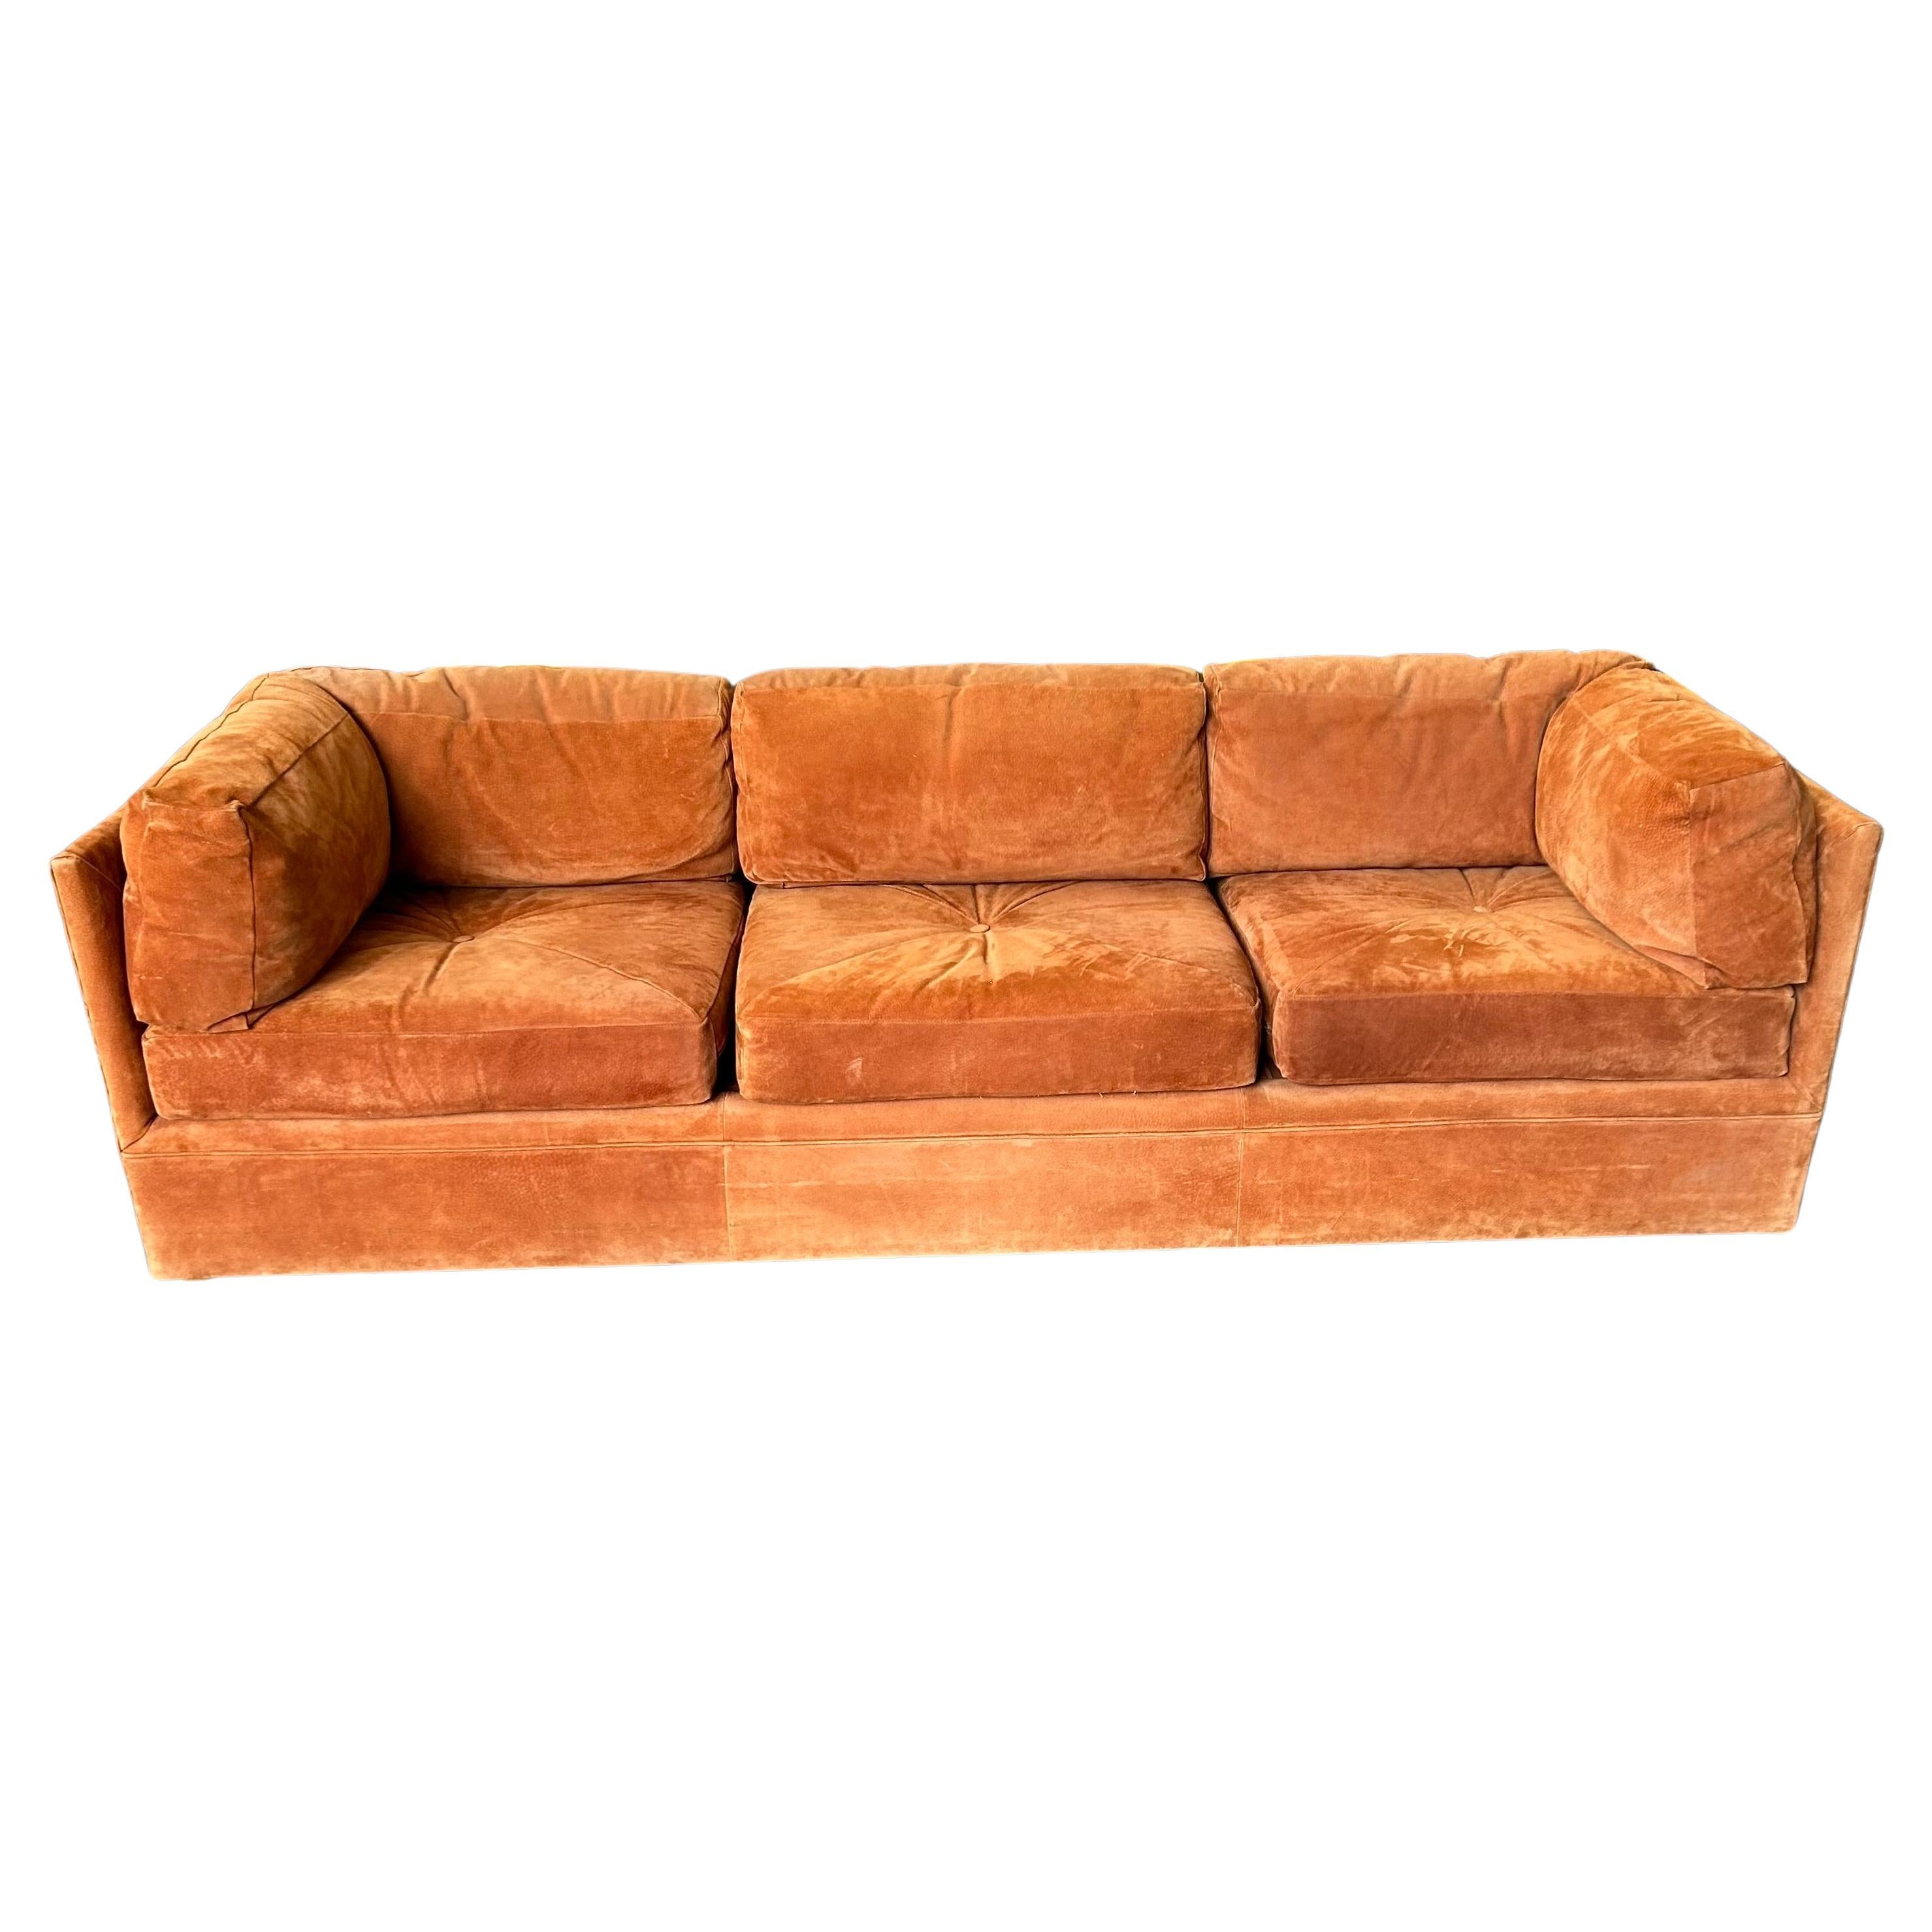 Vintage Suede Leather Sofa